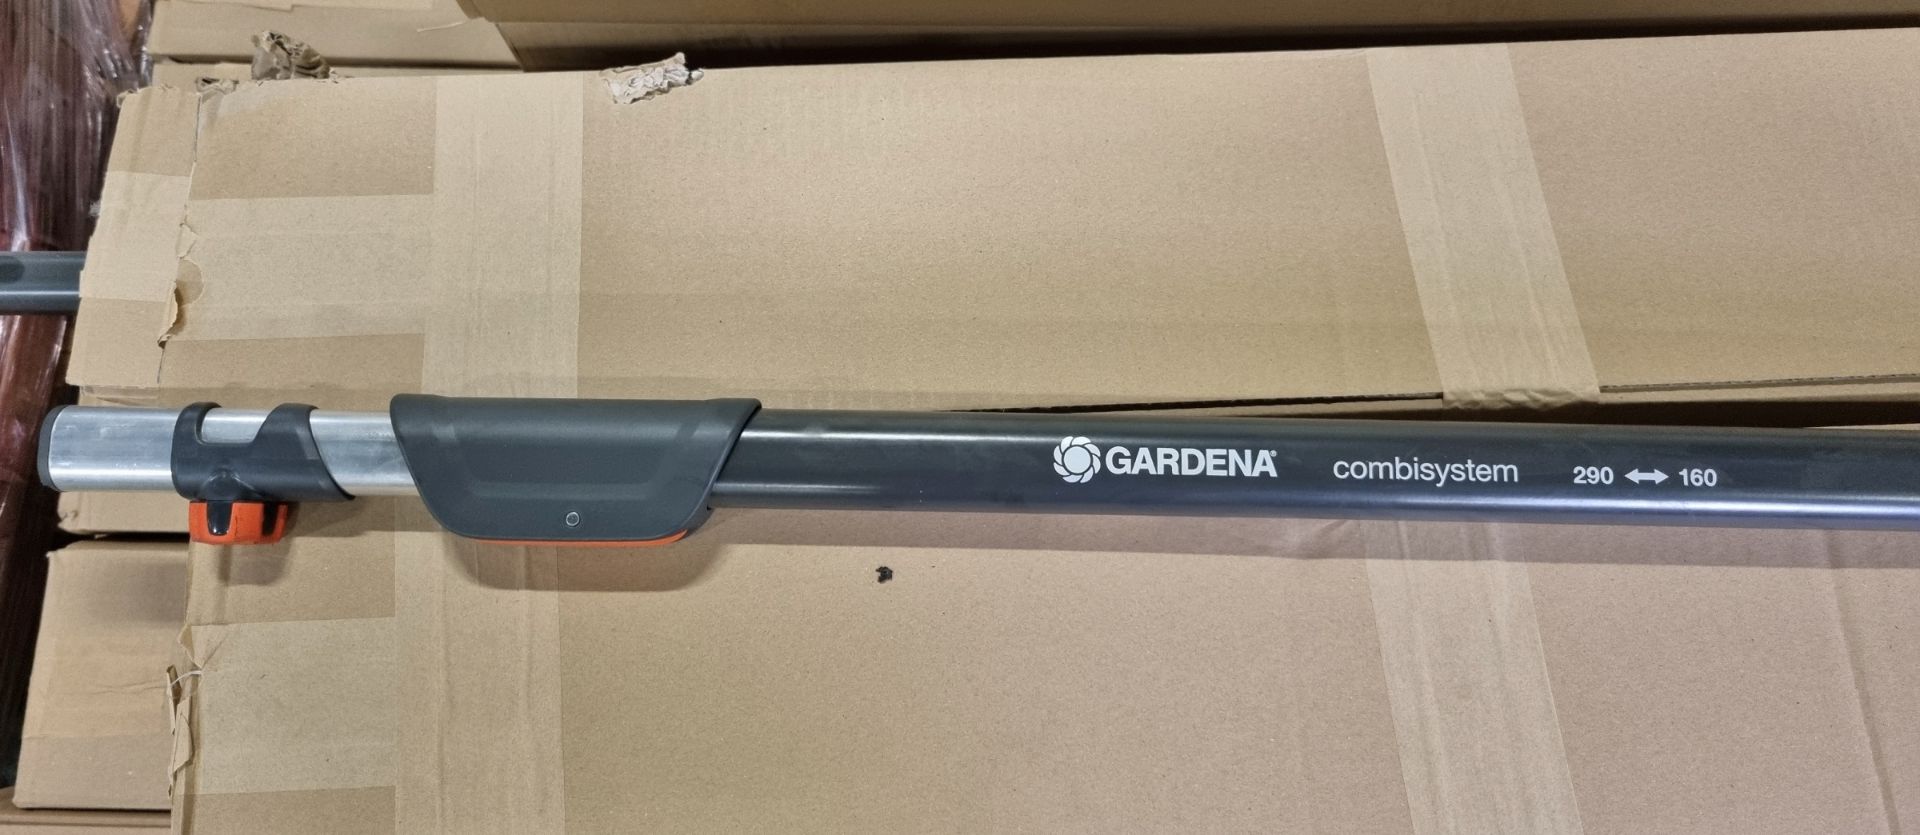 40x Gardena combisystem 210 - 390cm telescopic handles, 72x Gardena combisystem 160 - 290cm handles - Bild 3 aus 6